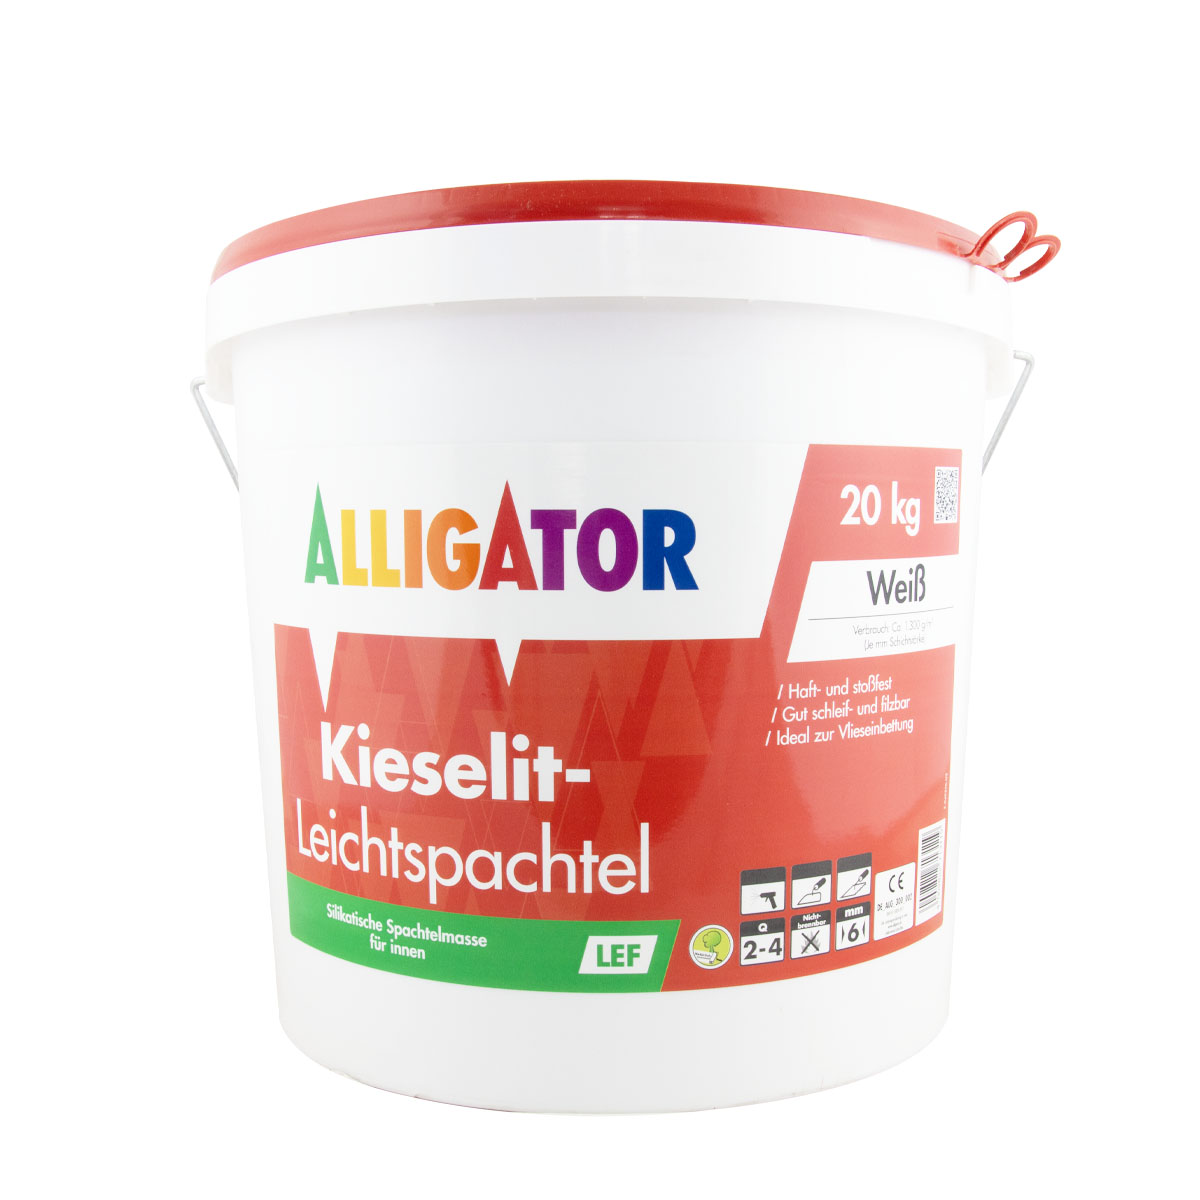 alligator_kieselit_leichtspachtel_20kg_gross